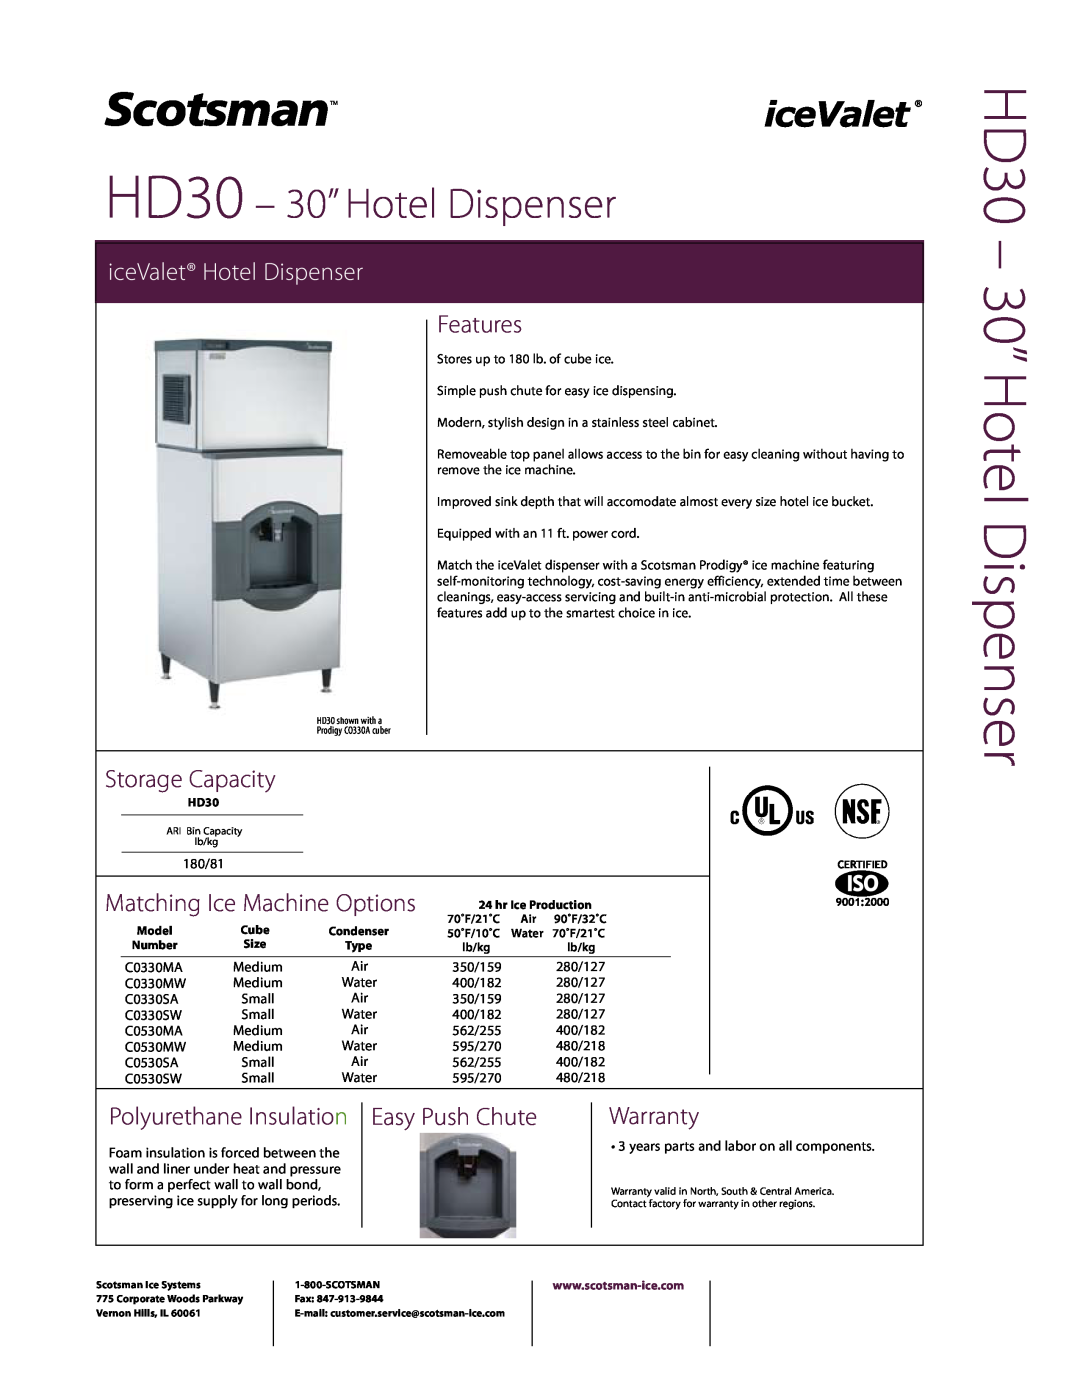 Scotsman Ice warranty Features, Storage Capacity, HD30 - 30” Hotel Dispenser, iceValet Hotel Dispenser, Warranty 